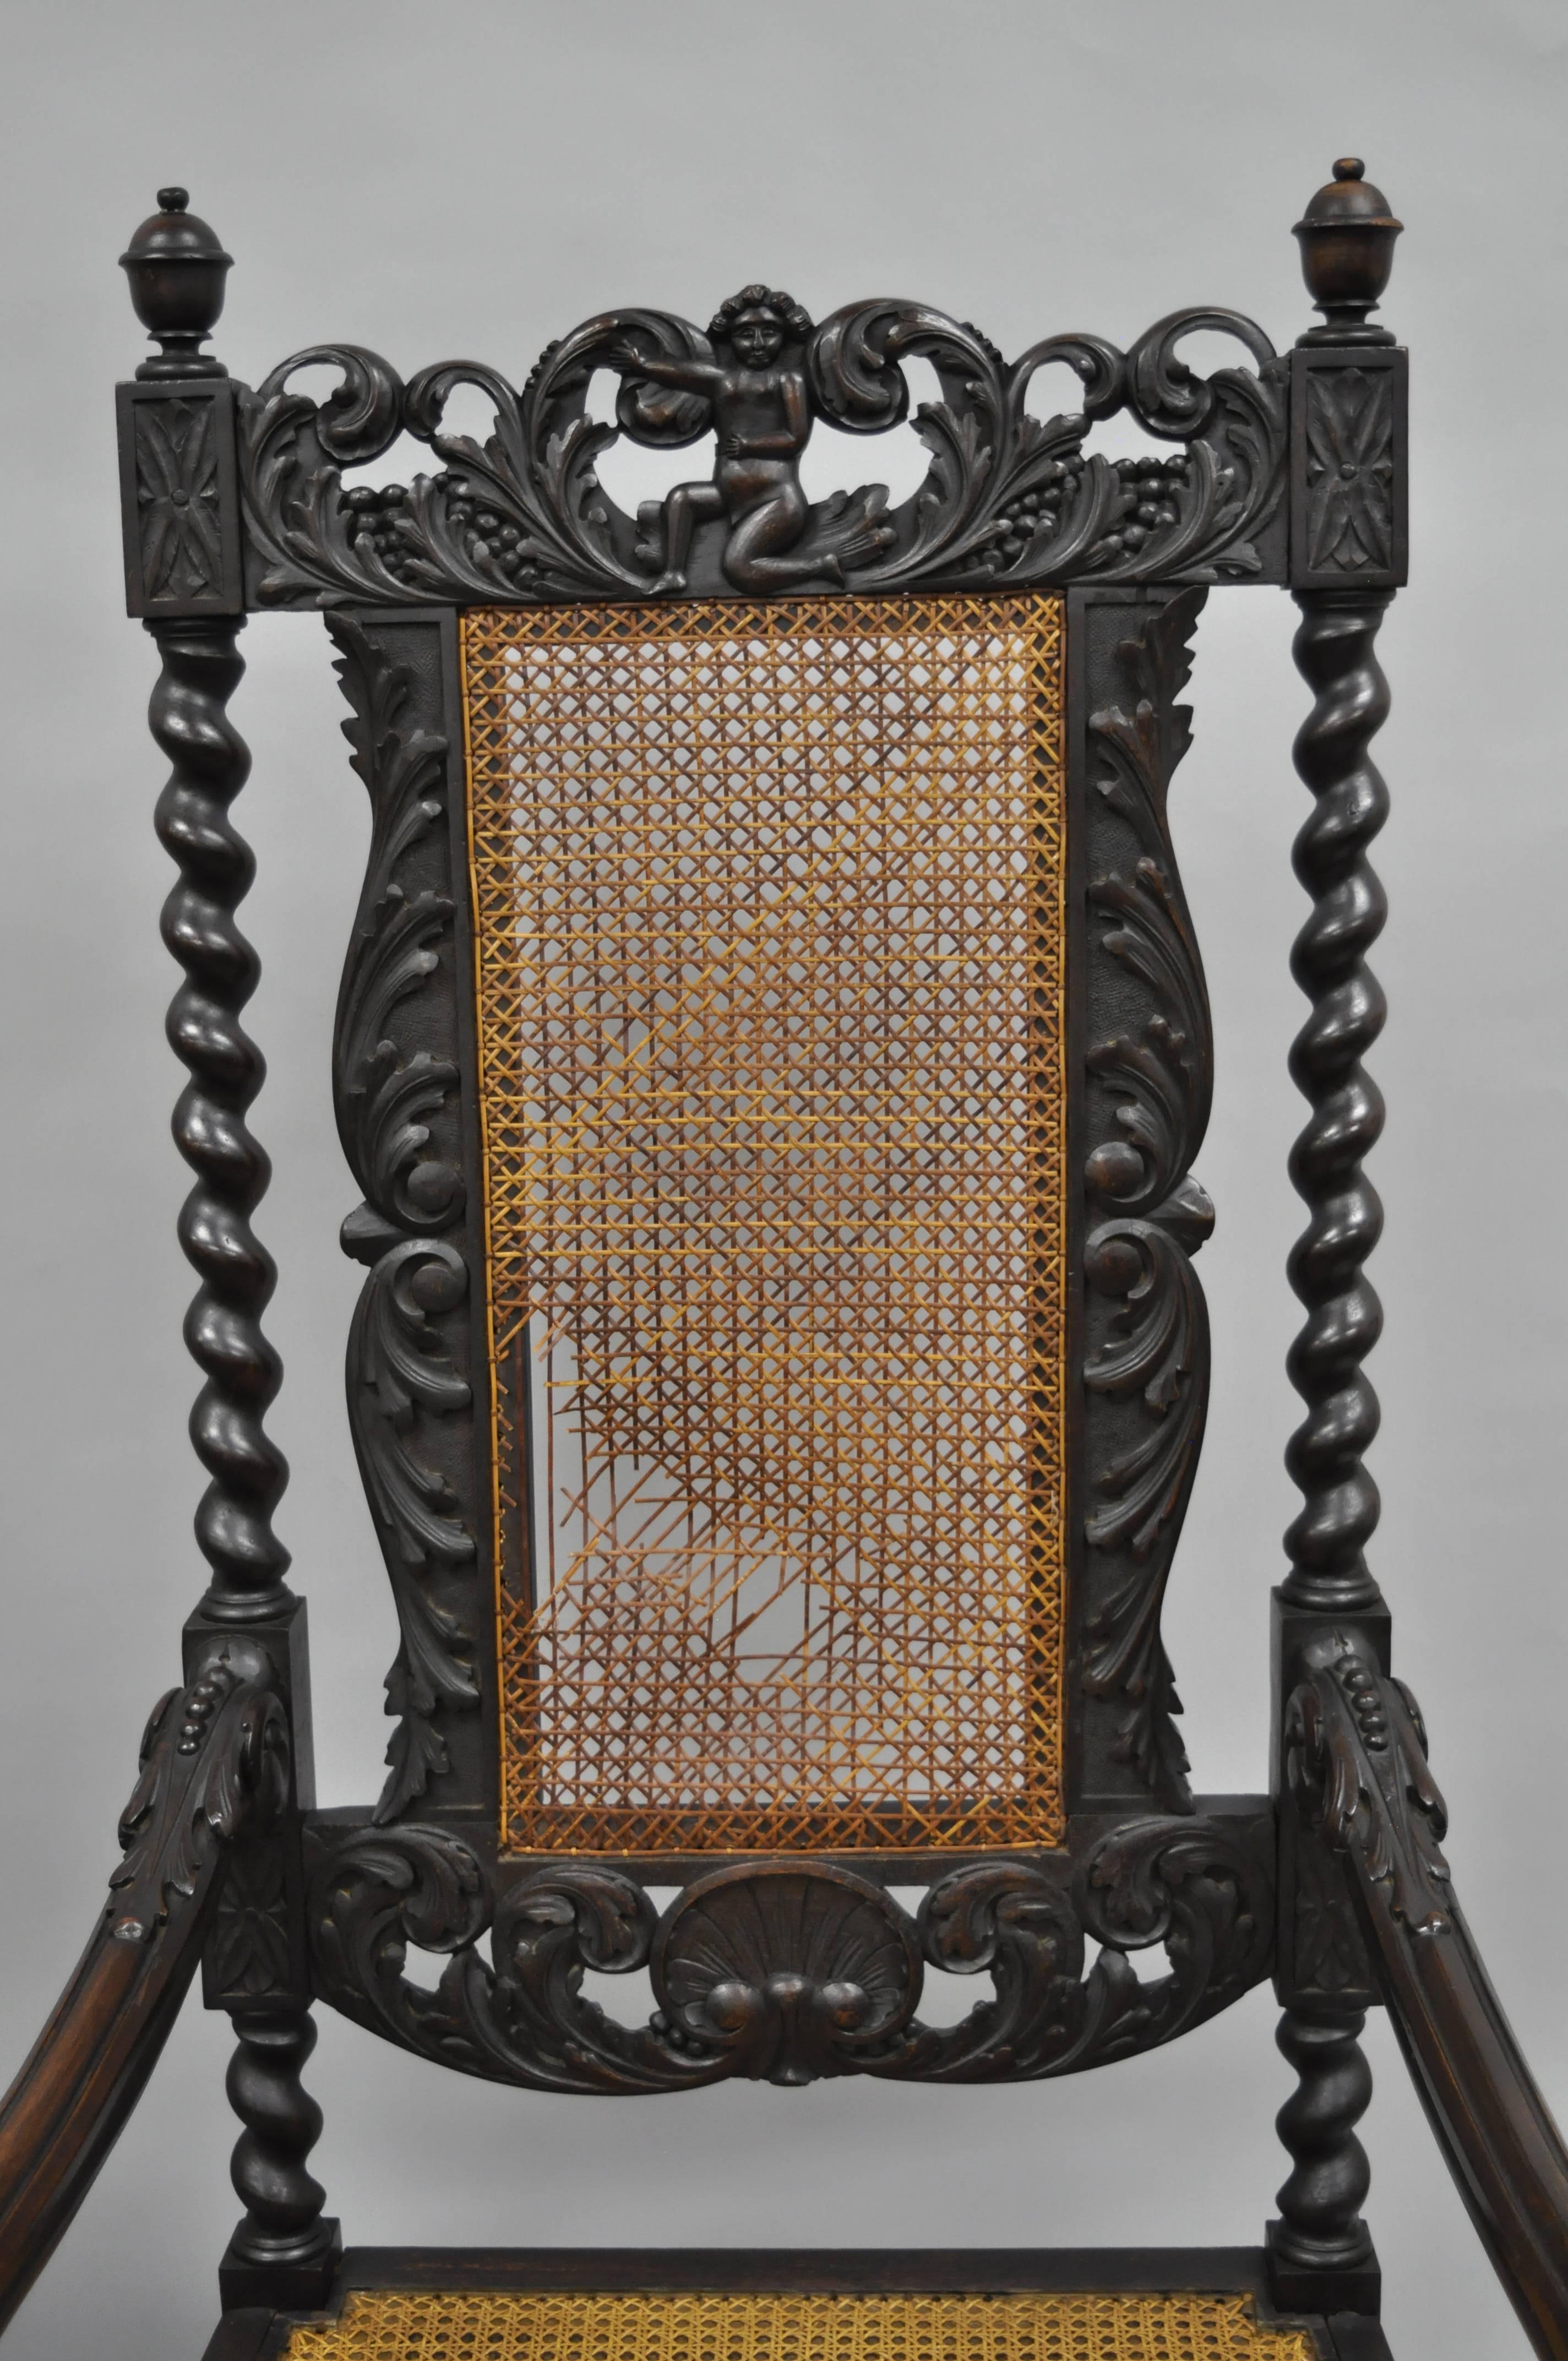 Cane Jacobean Renaissance Revival Cherub Carved Parlor Throne Chairs Armchairs